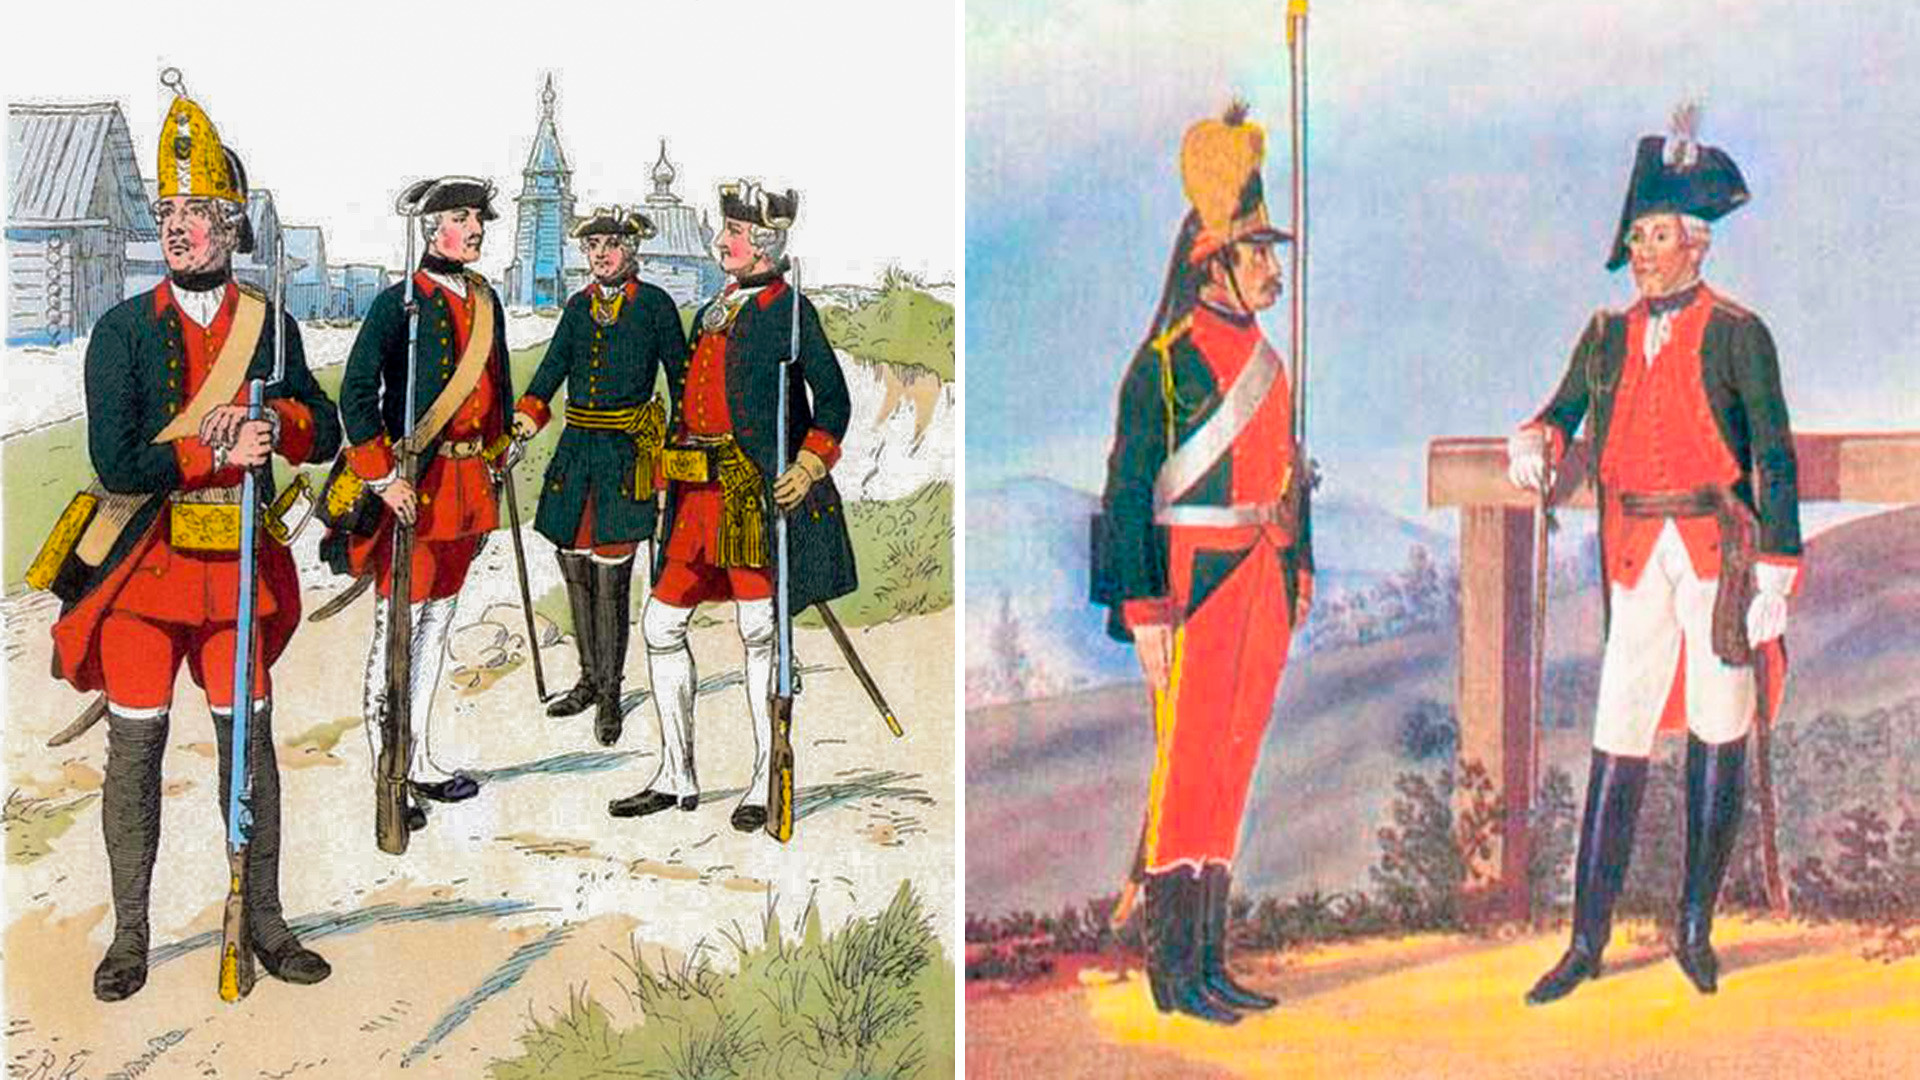 Reforma vojske (prije i poslije reforme)
